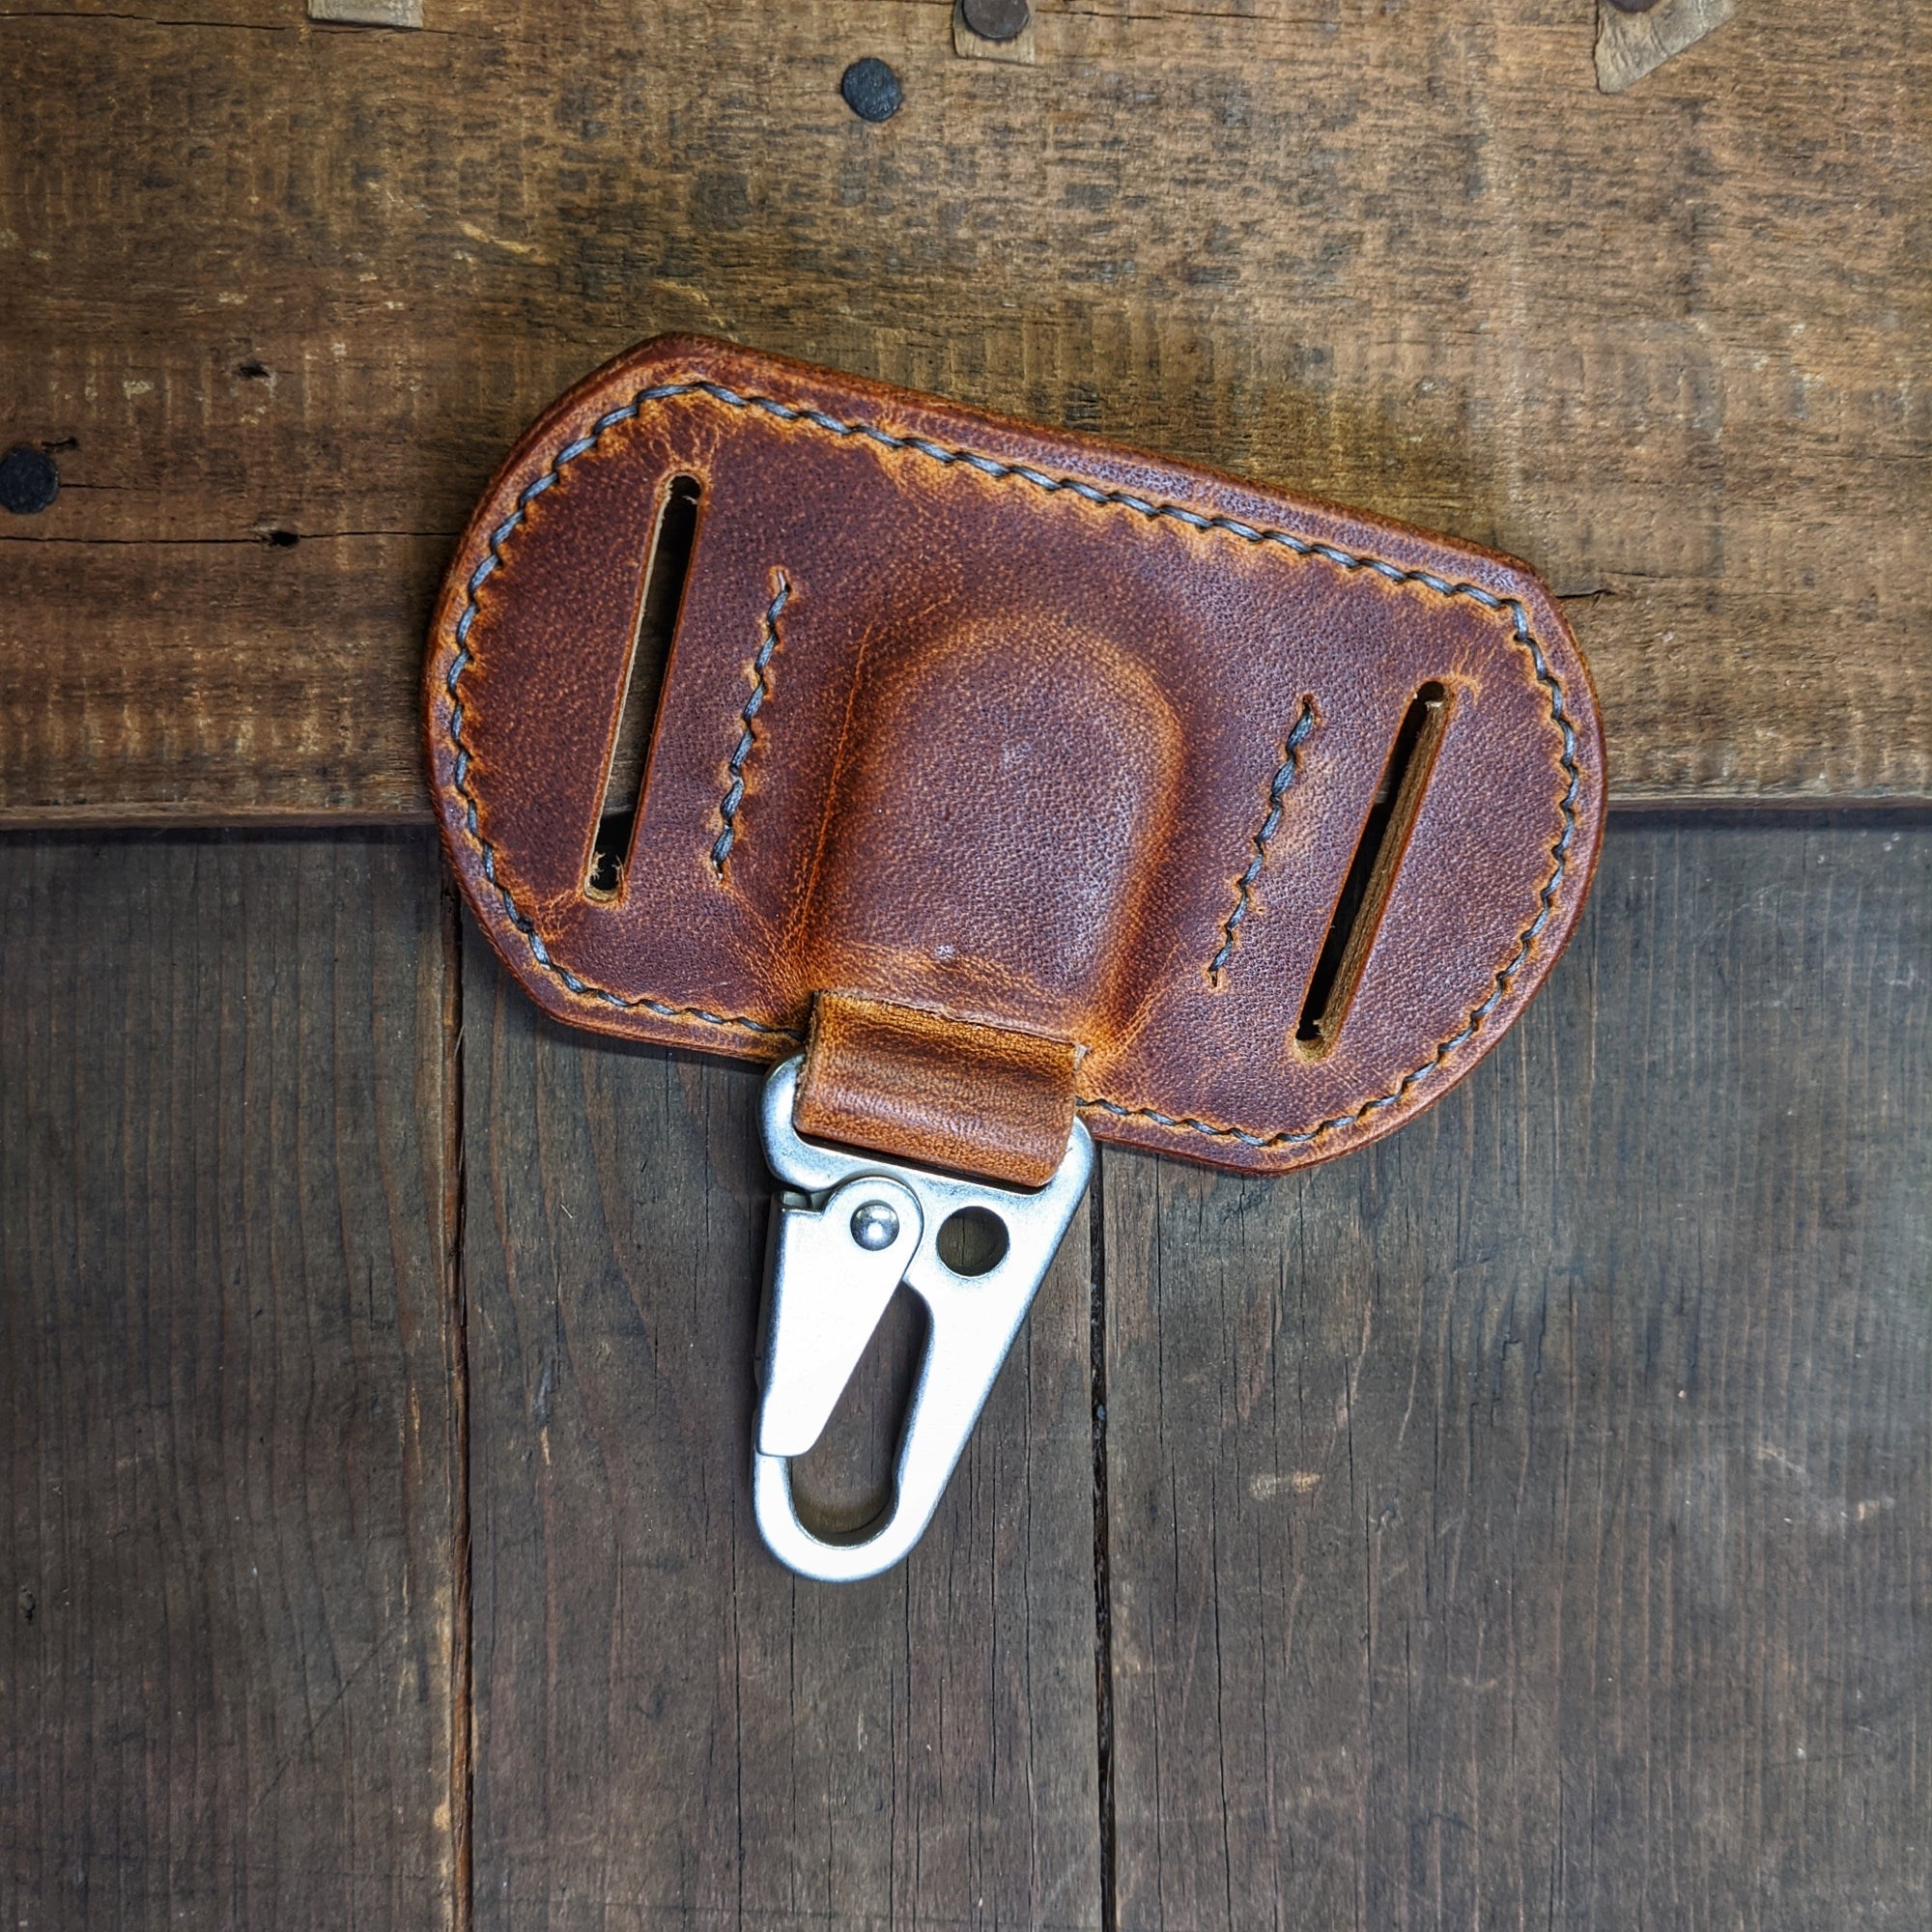 Caliber Leather Company Pocono - Belt Key Clip - Utility Belt Keychain Brown / Antique Brass / No - Hand Stitch Along Belt Holes